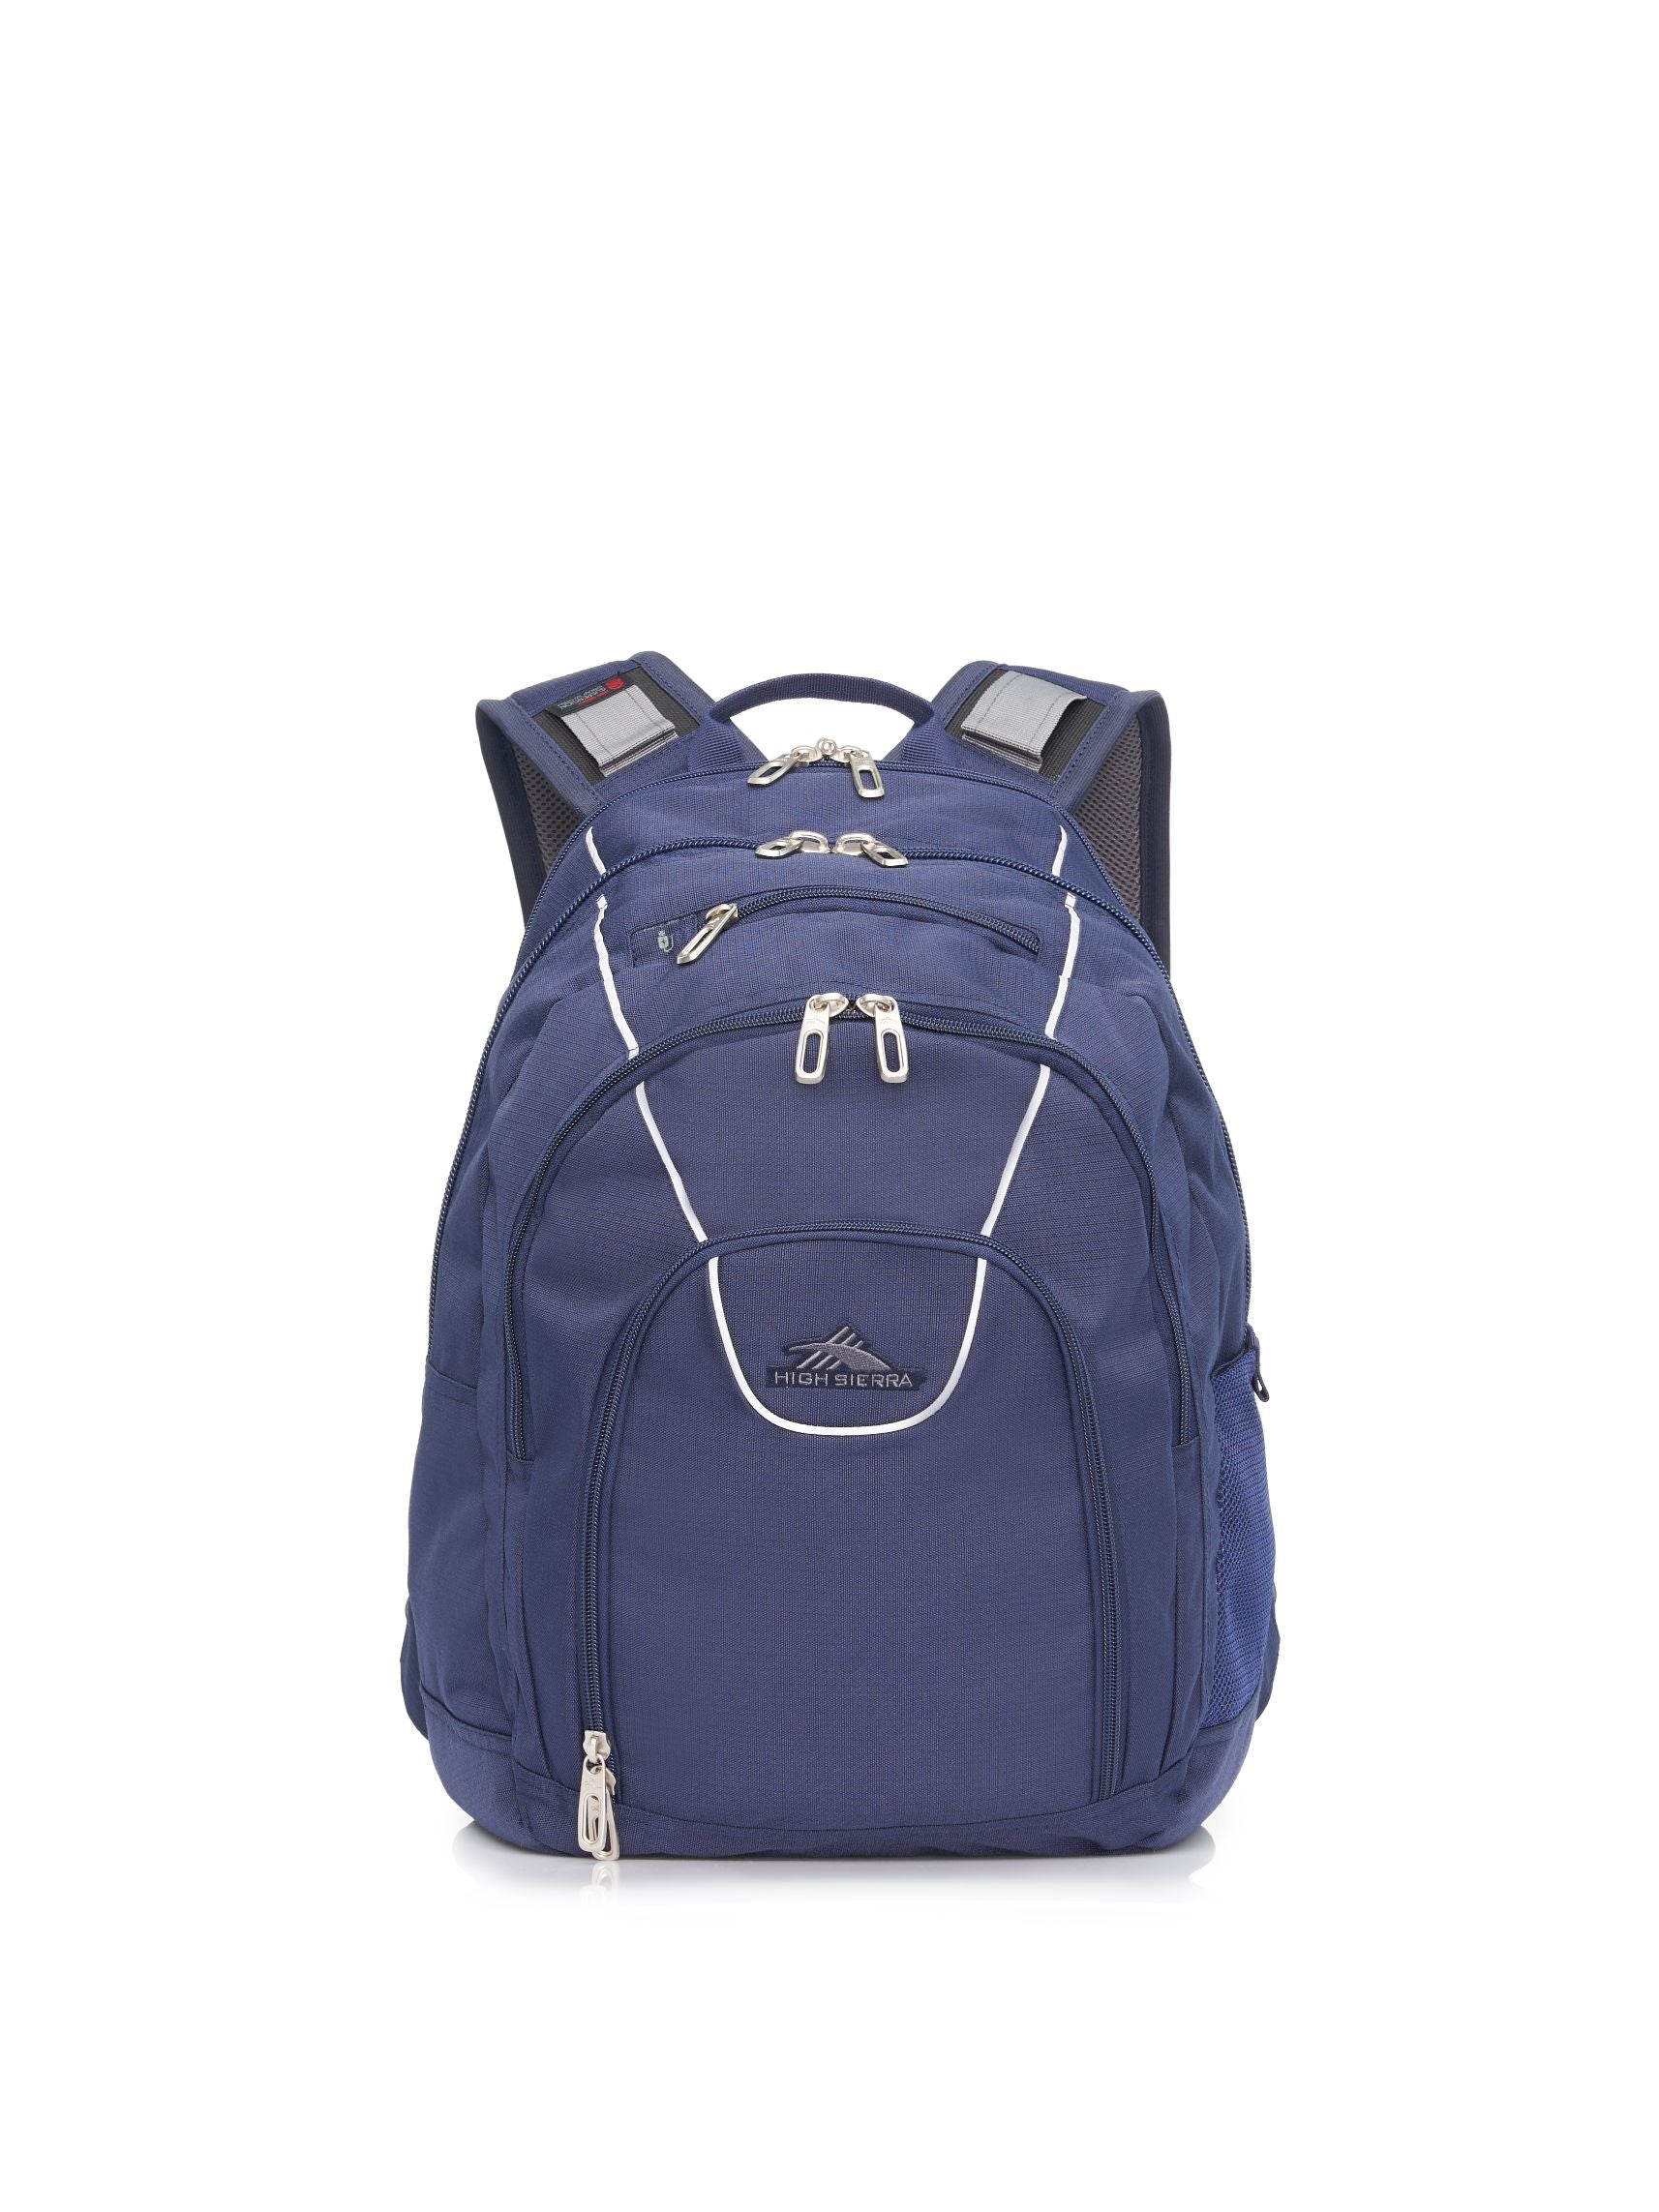 High Sierra - Academy 3.0 Backpack - Marine Blue-1